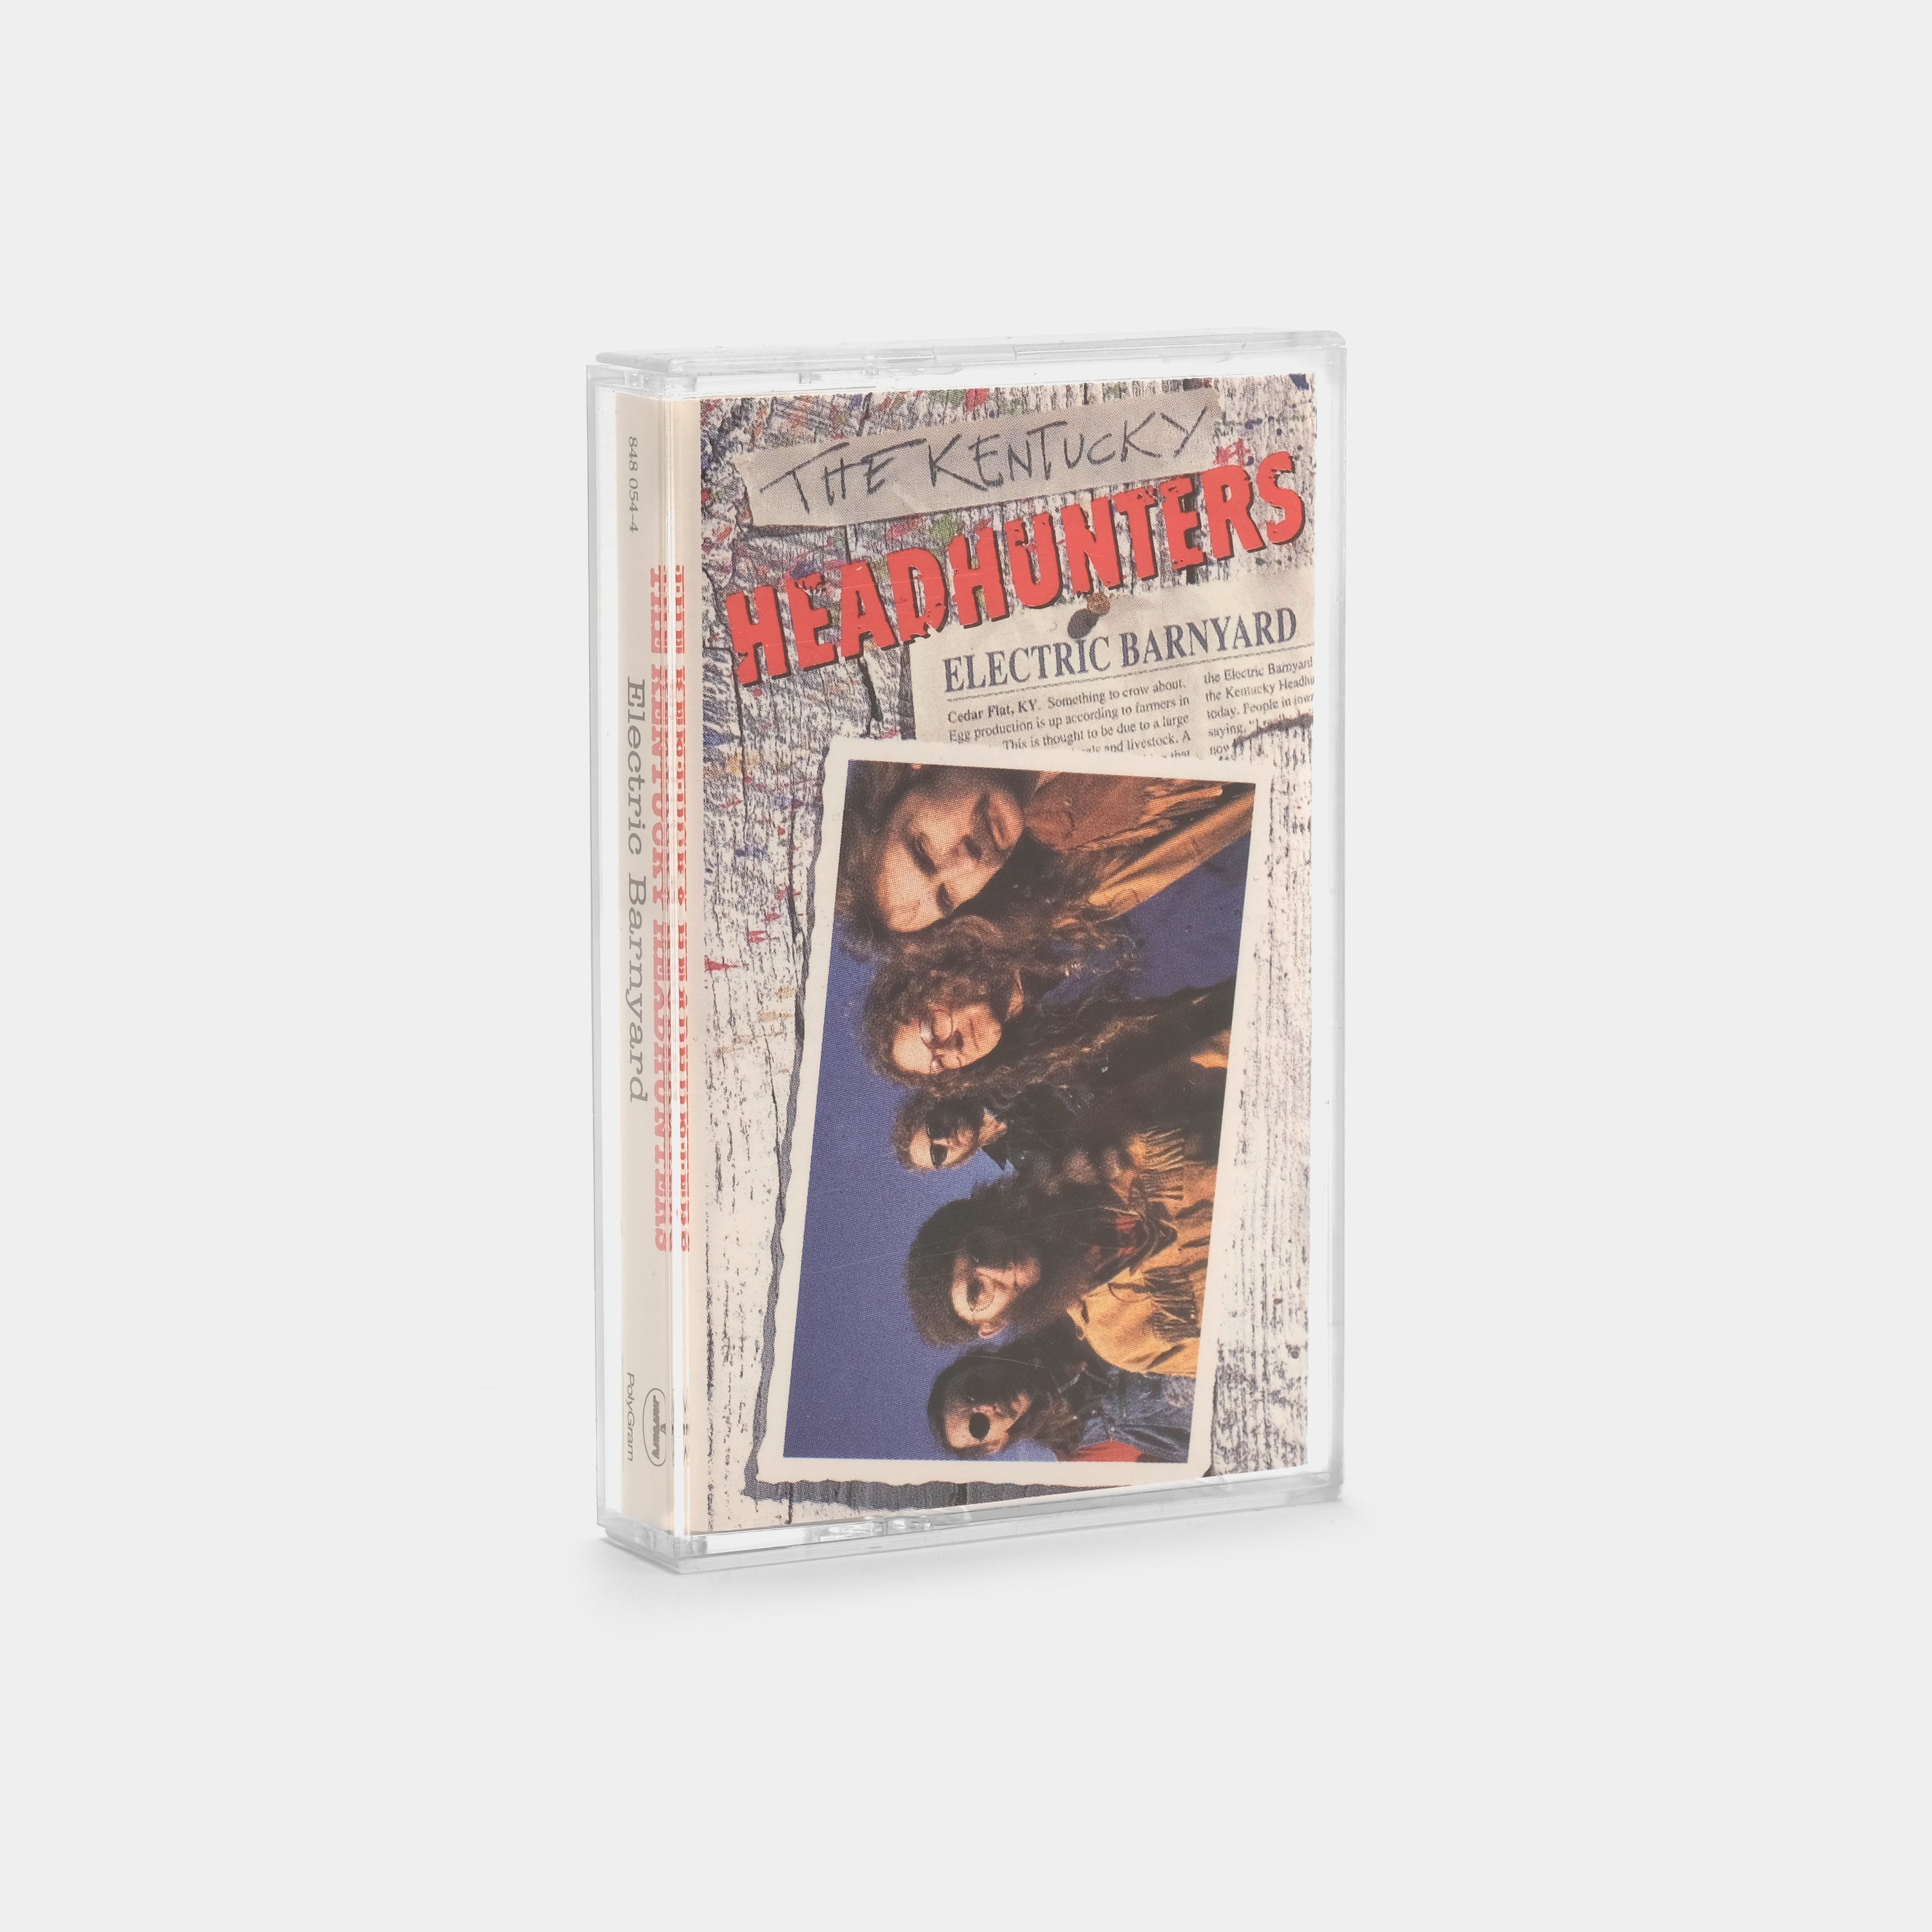 The Kentucky Headhunters - Electric Barnyard Cassette Tape